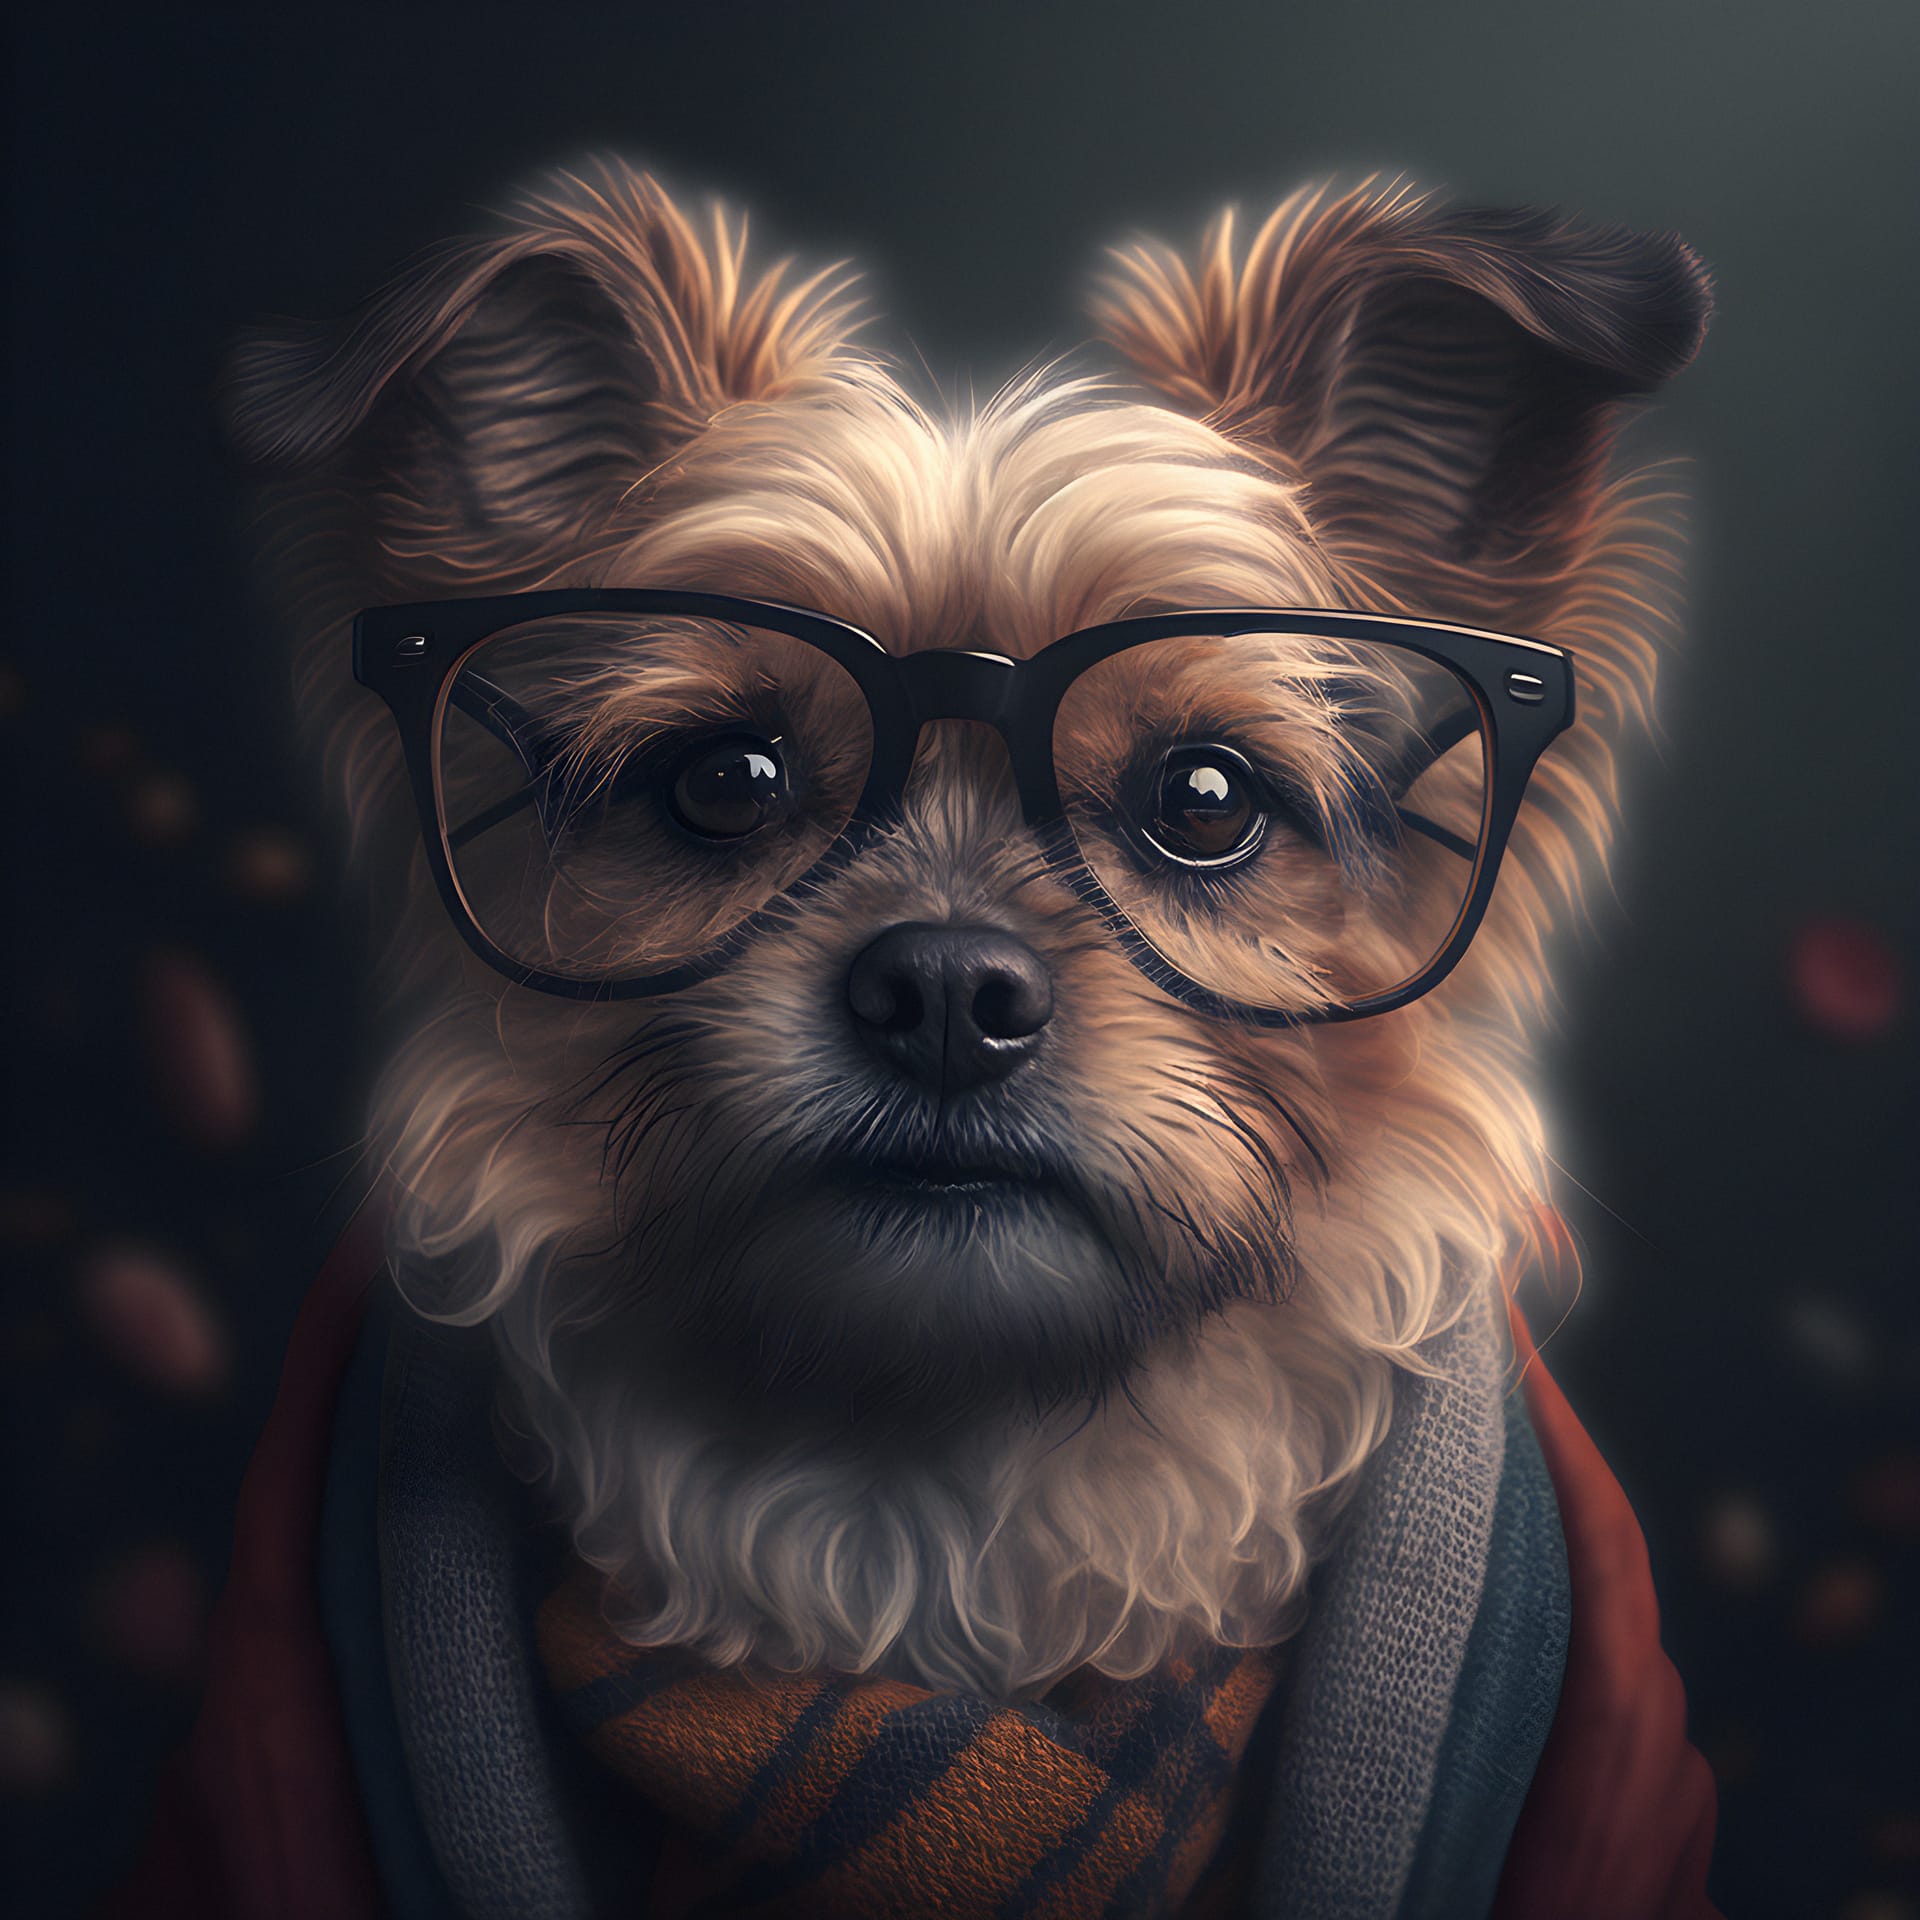 Hipster dog wearing clothes glasses dog portrait